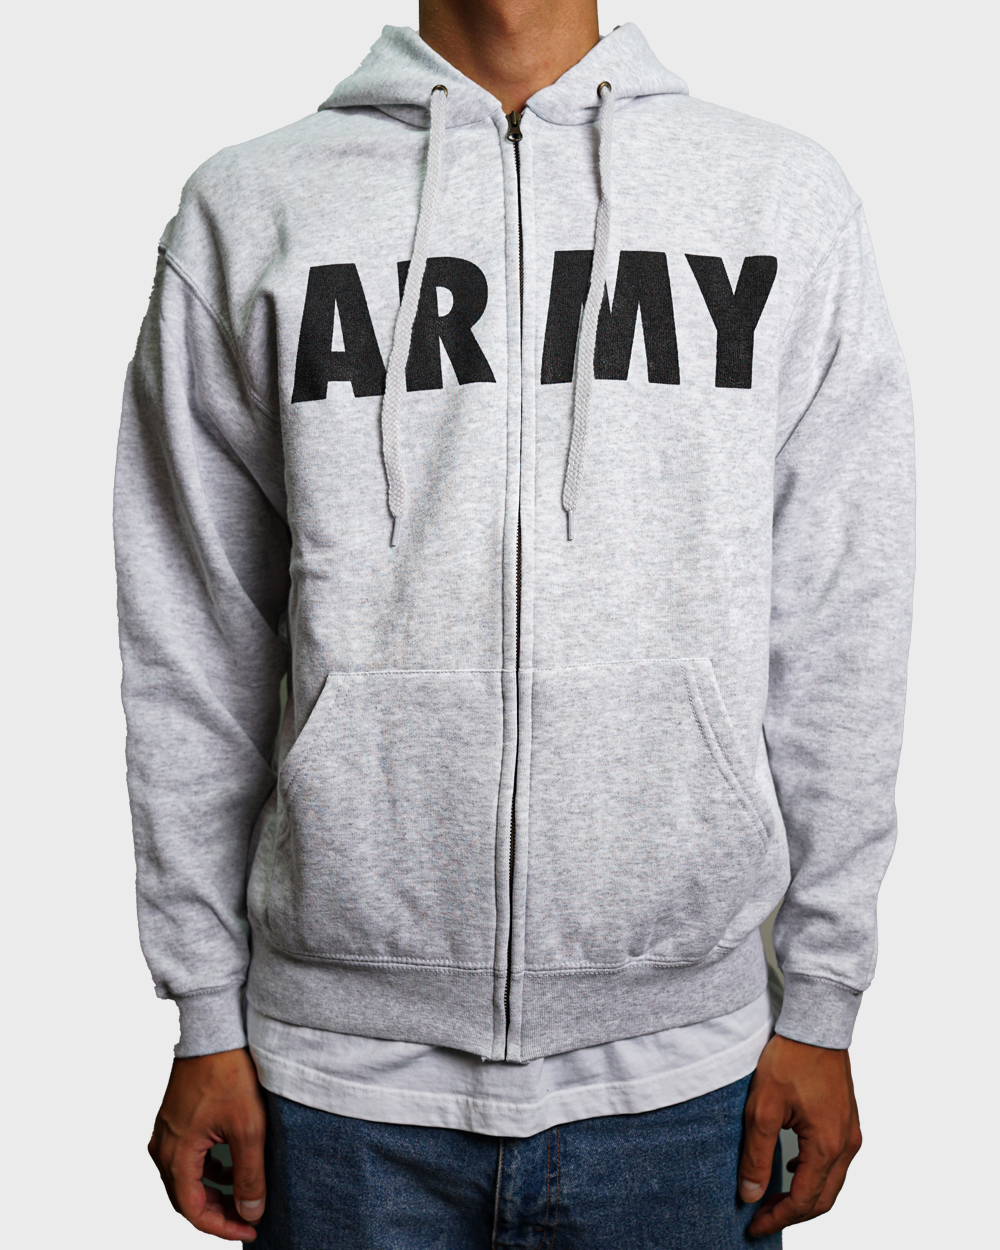 FZ-Army (Grey)